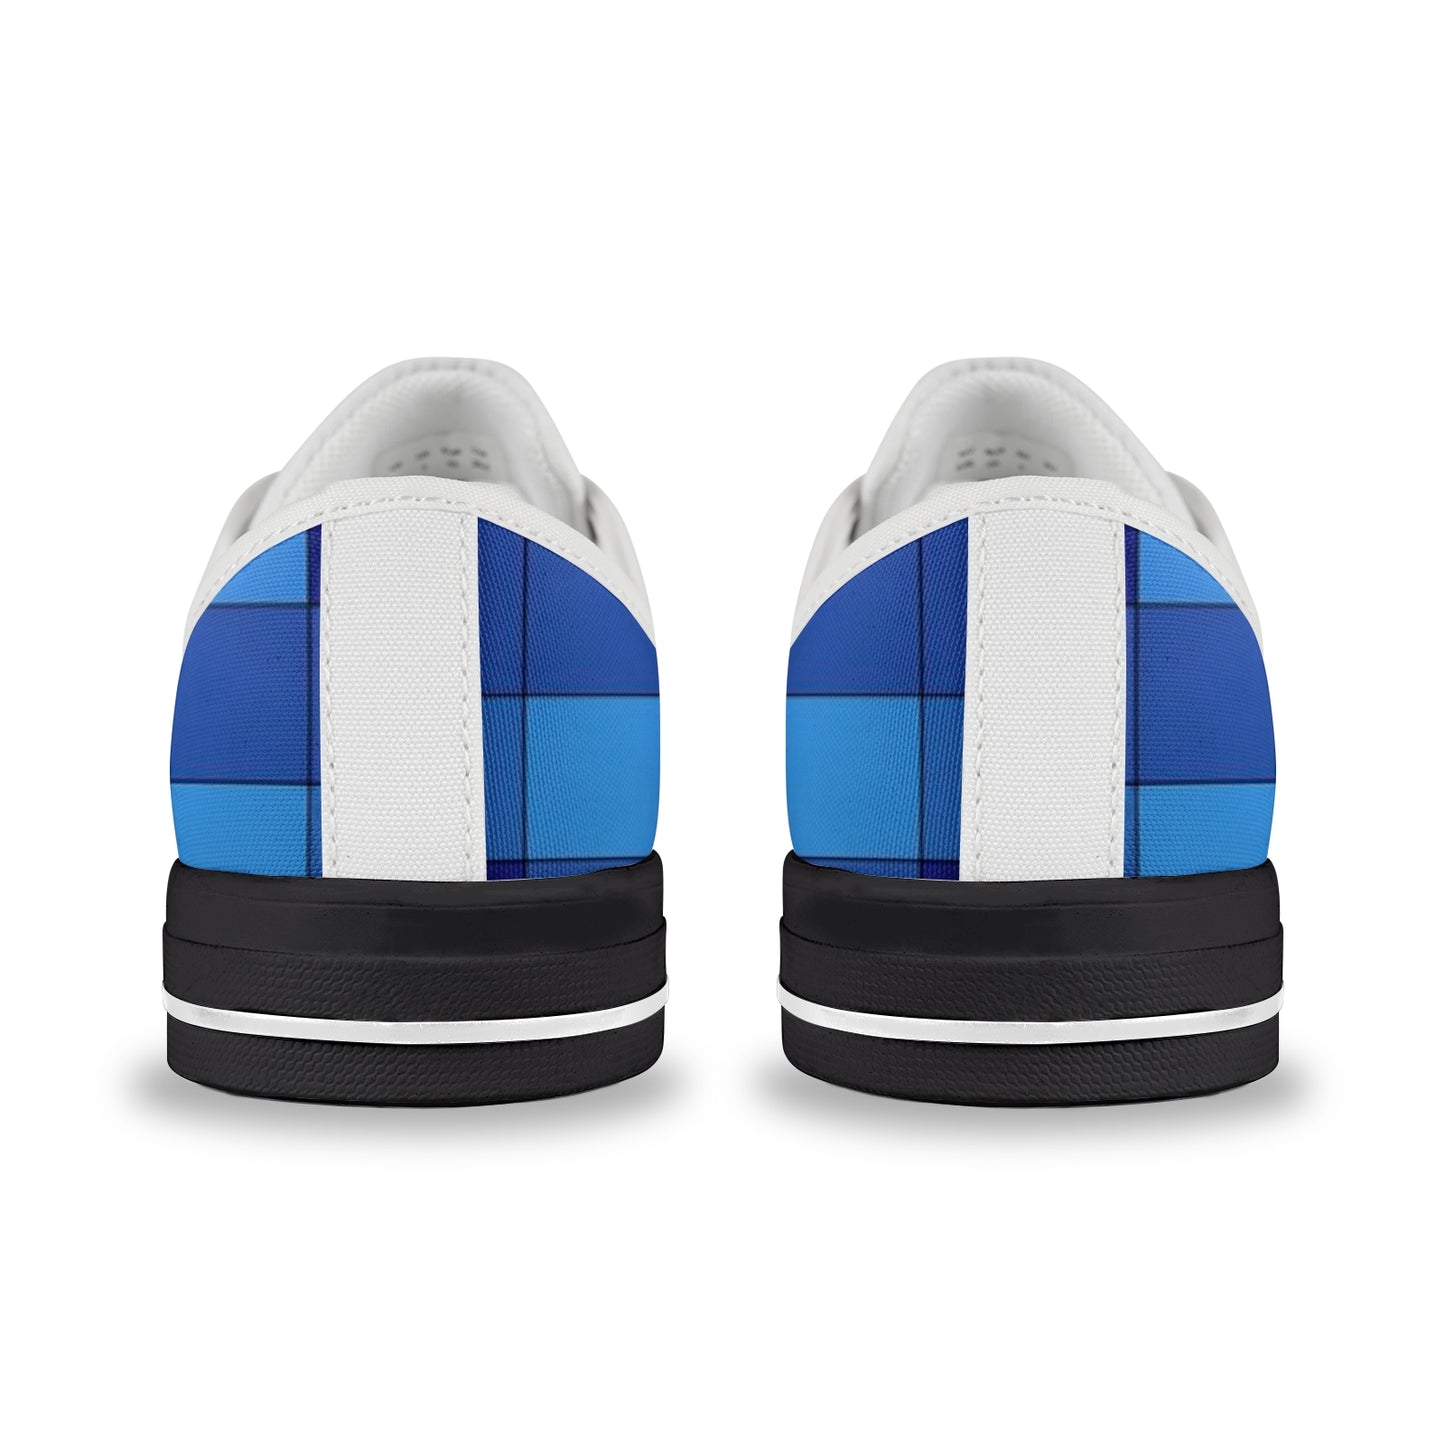 Women's Sneakers - Blue Cubes